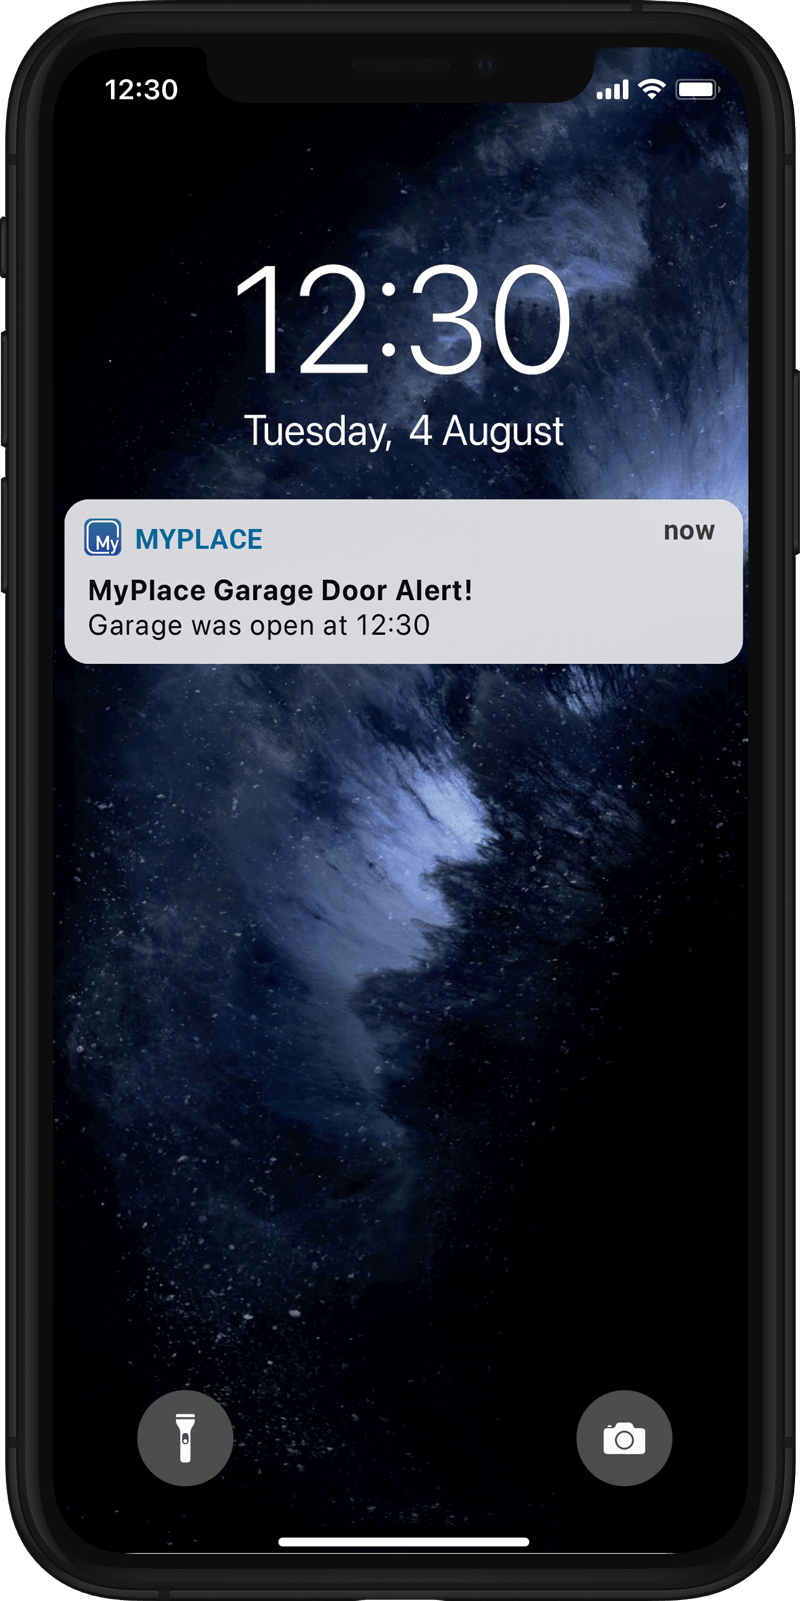 MyGarage alert on smart phone